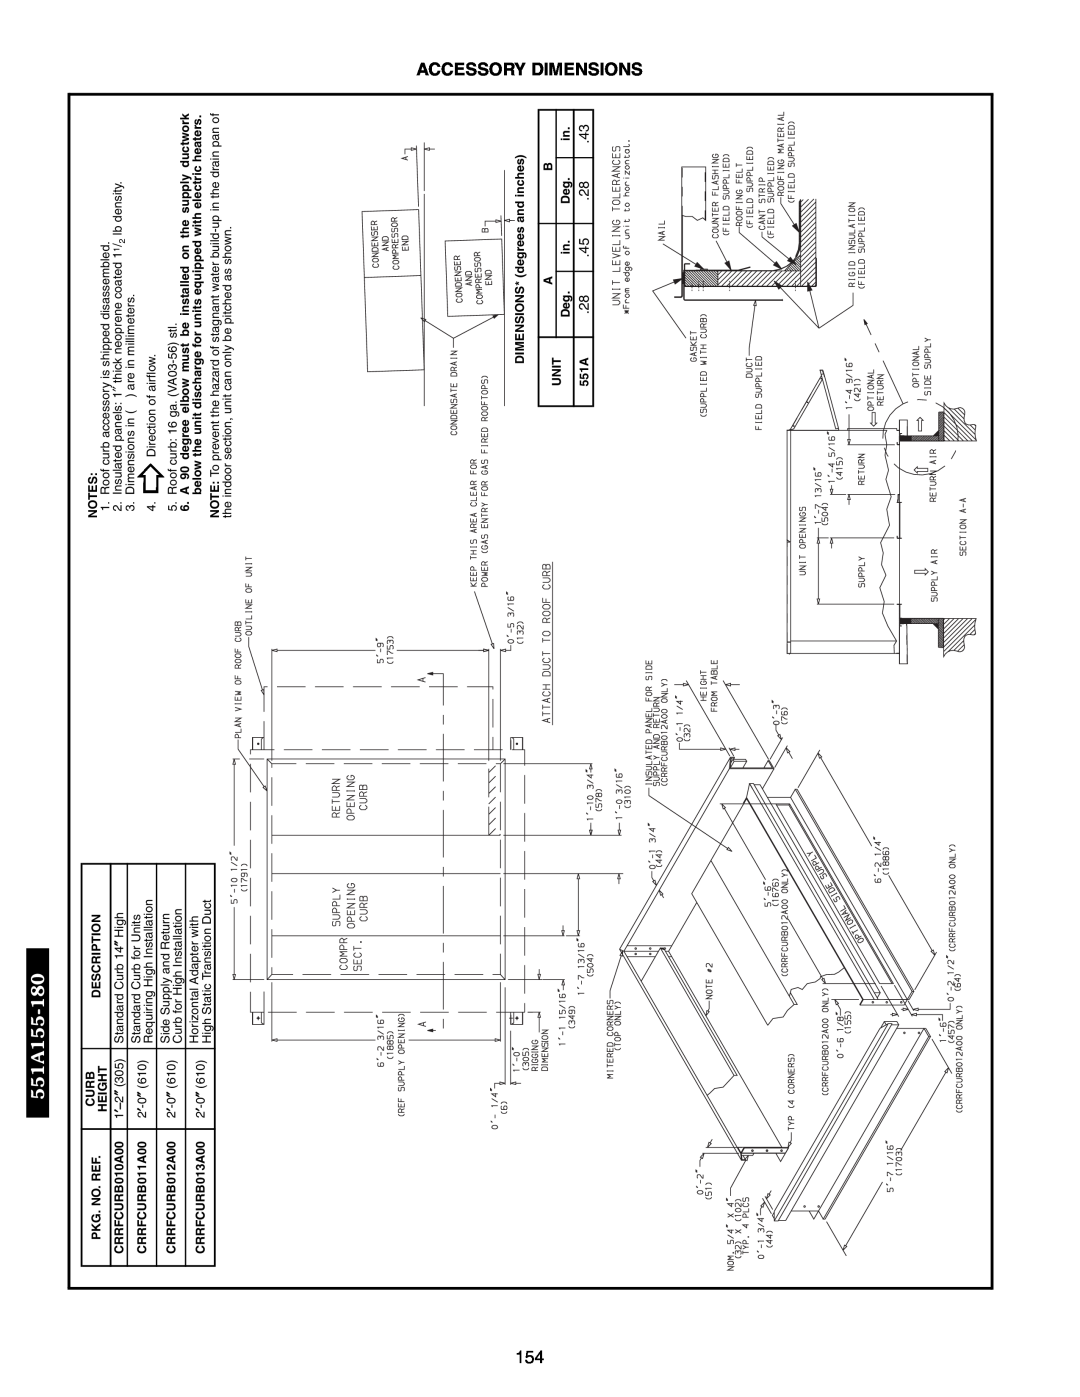 Bryant 551B, 558F manual 551A155-180, Accessory Dimensions 